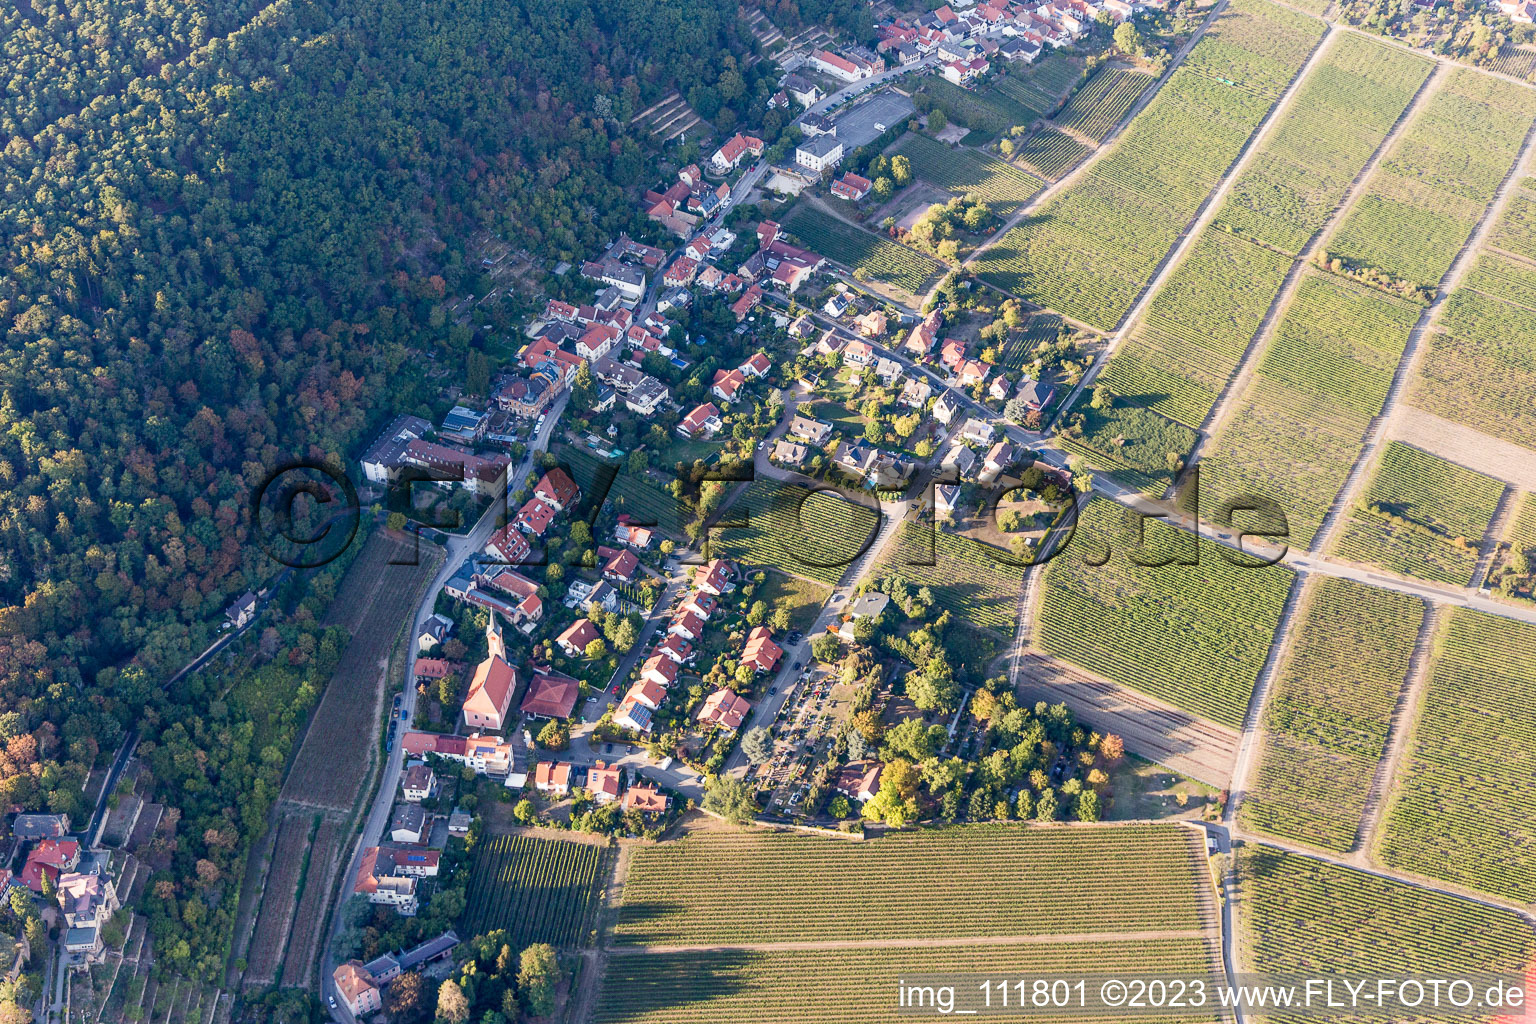 Vue aérienne de Quartier Haardt in Neustadt an der Weinstraße dans le département Rhénanie-Palatinat, Allemagne